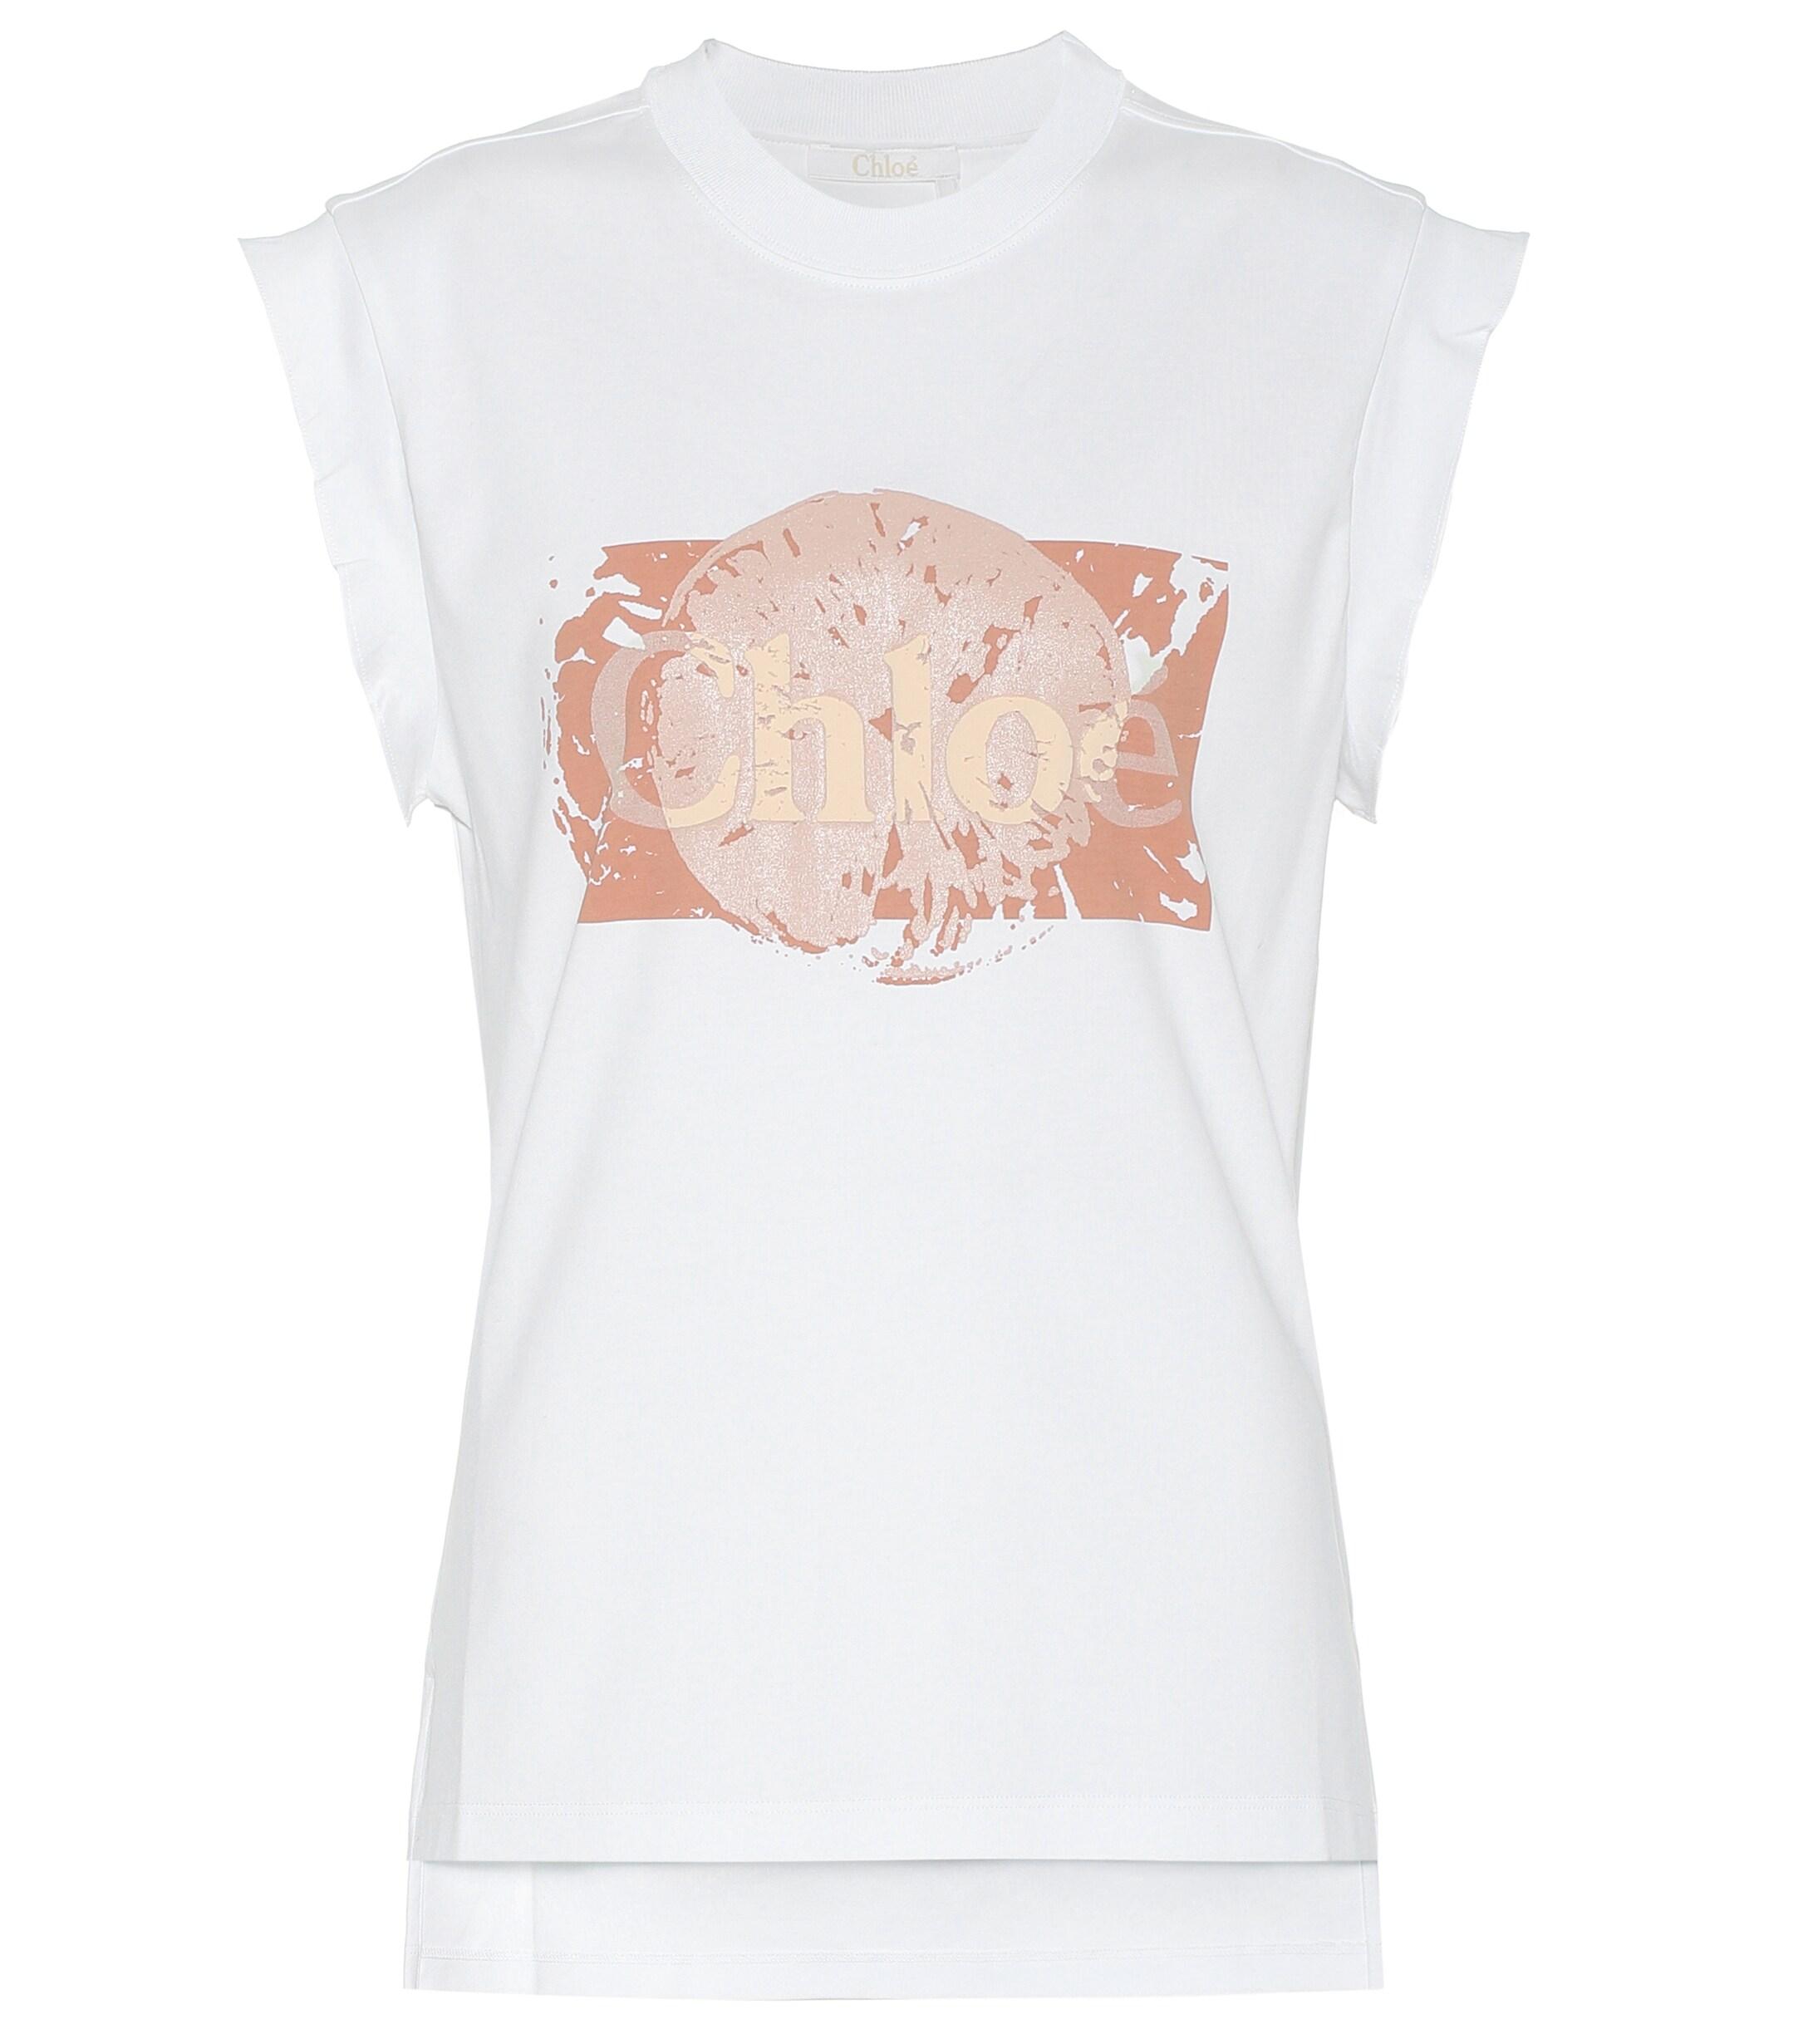 Chloé Logo Cotton Jersey T-shirt in White - Lyst